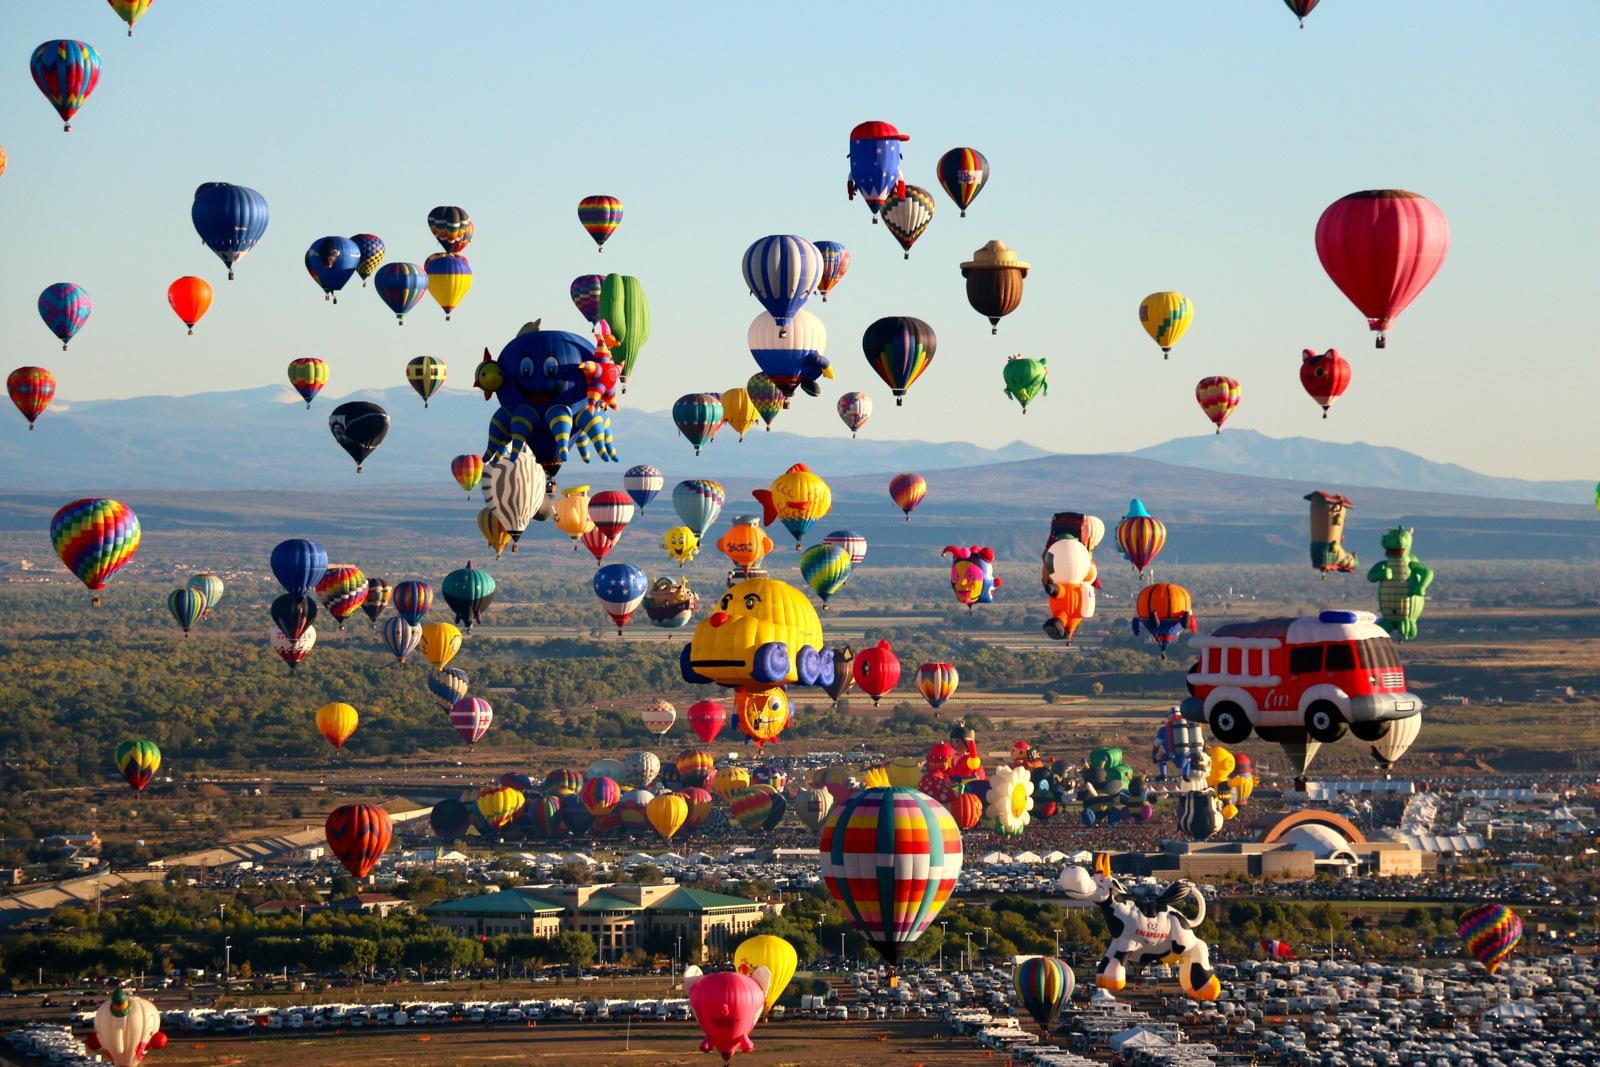 The Colorful Wonder of the Albuquerque Balloon Fiesta